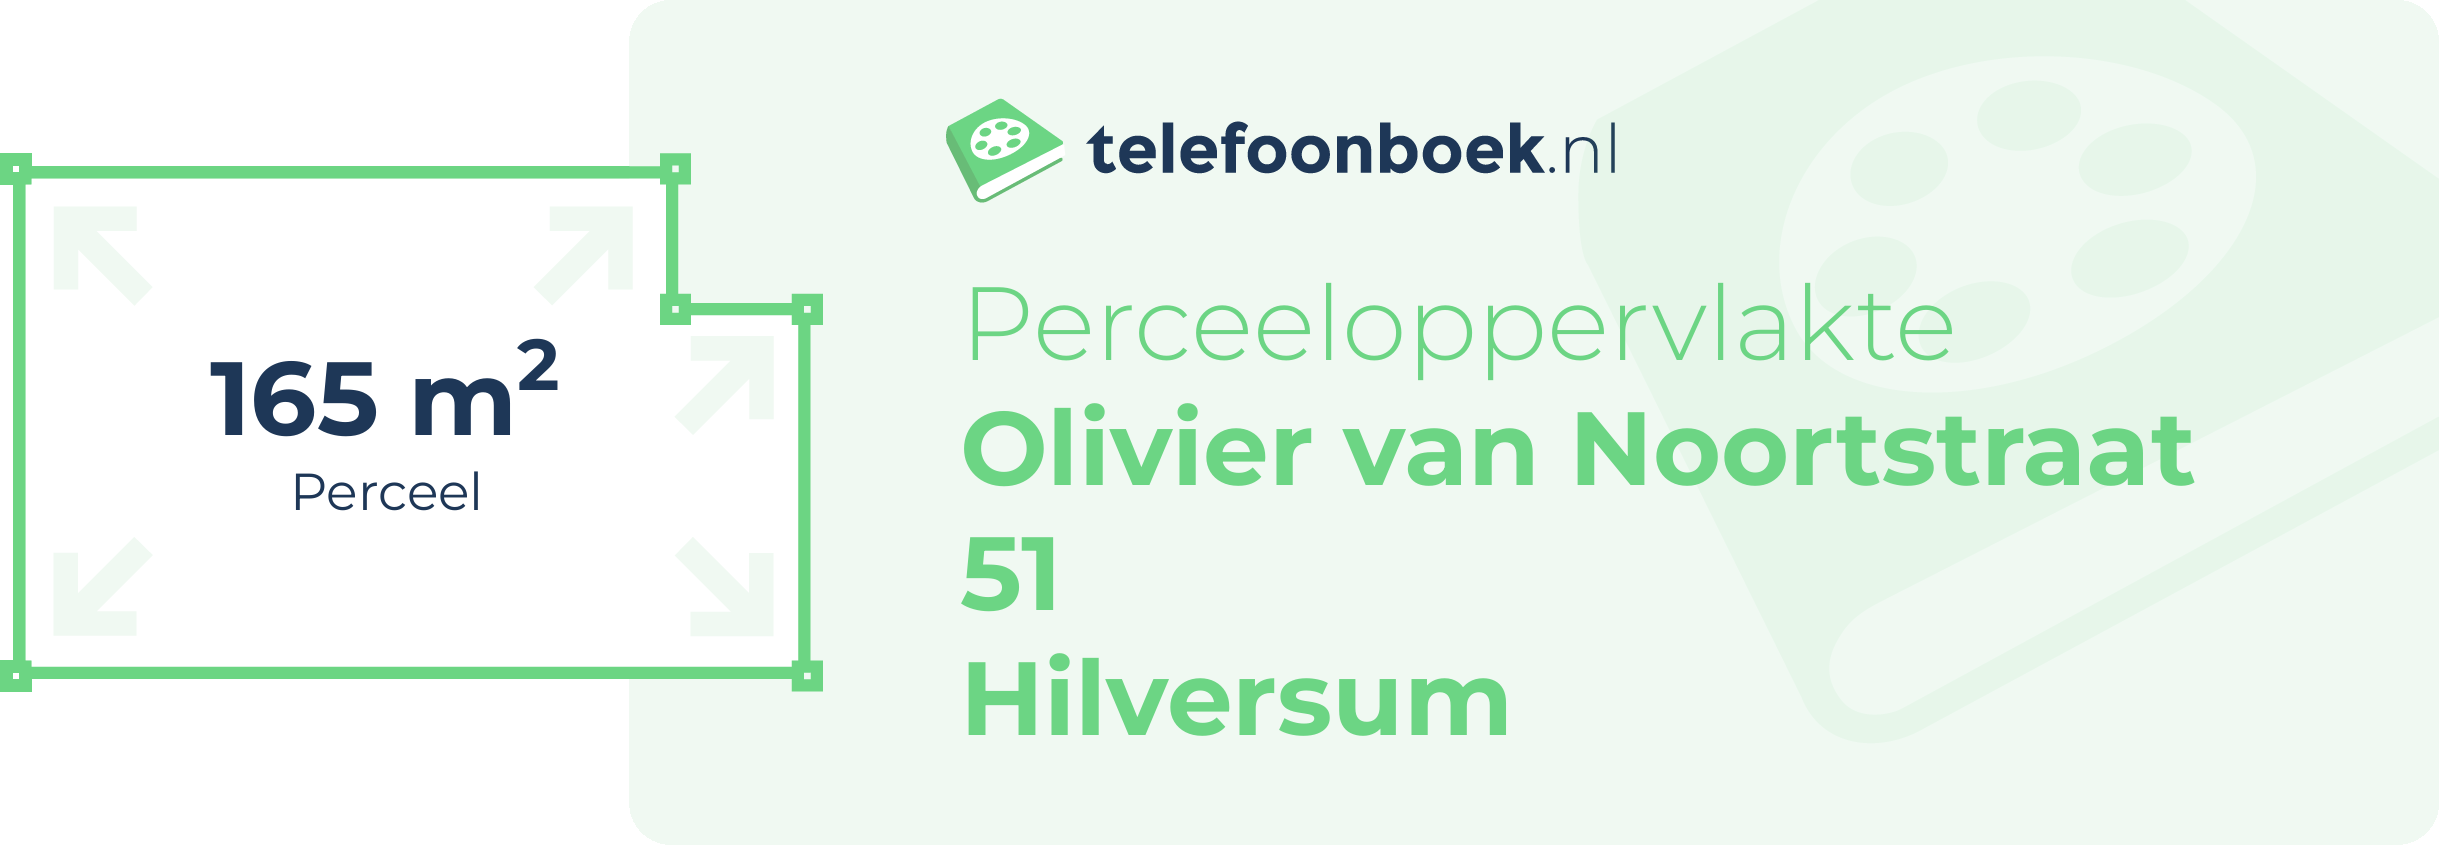 Perceeloppervlakte Olivier Van Noortstraat 51 Hilversum